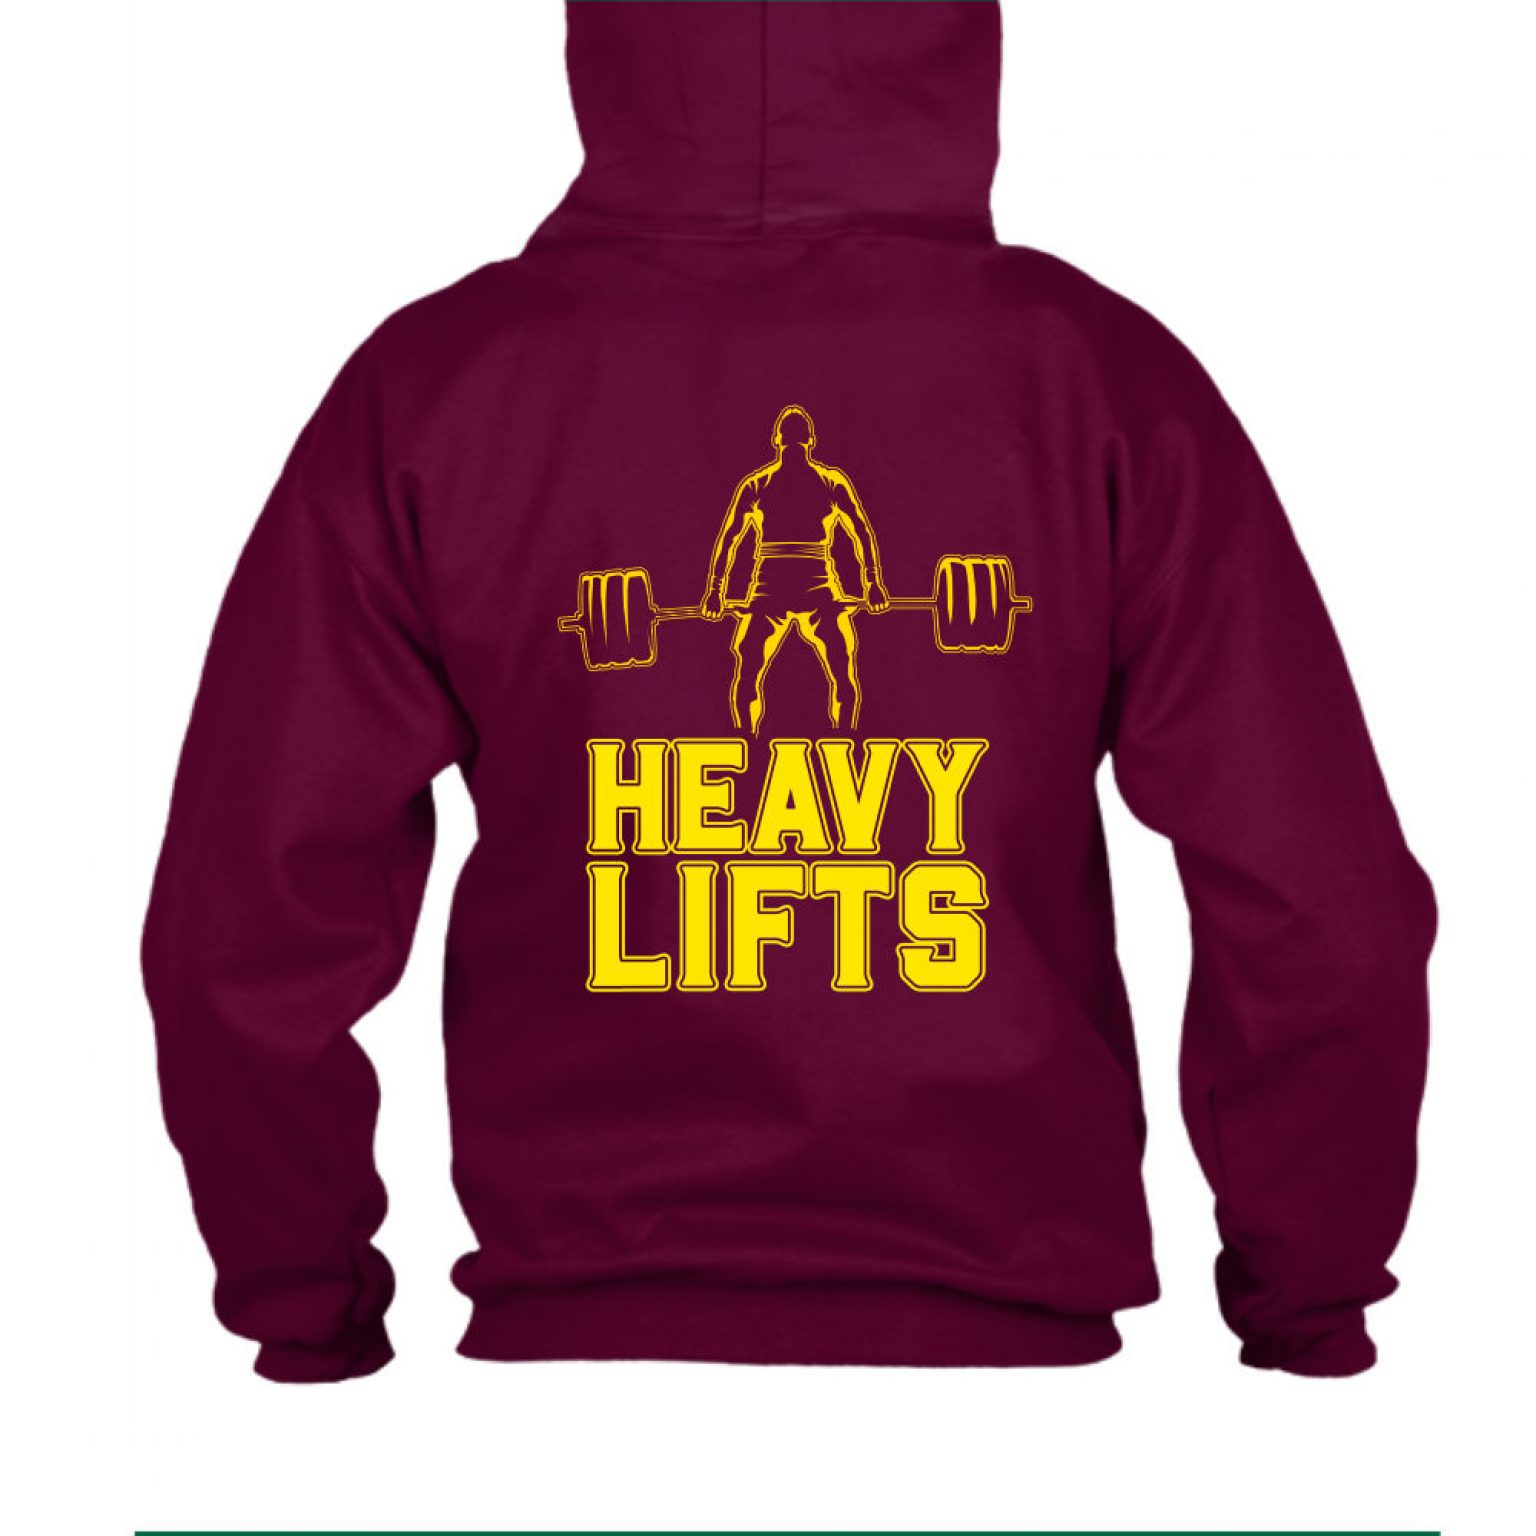 heavylifts hoodie herren brugundy back